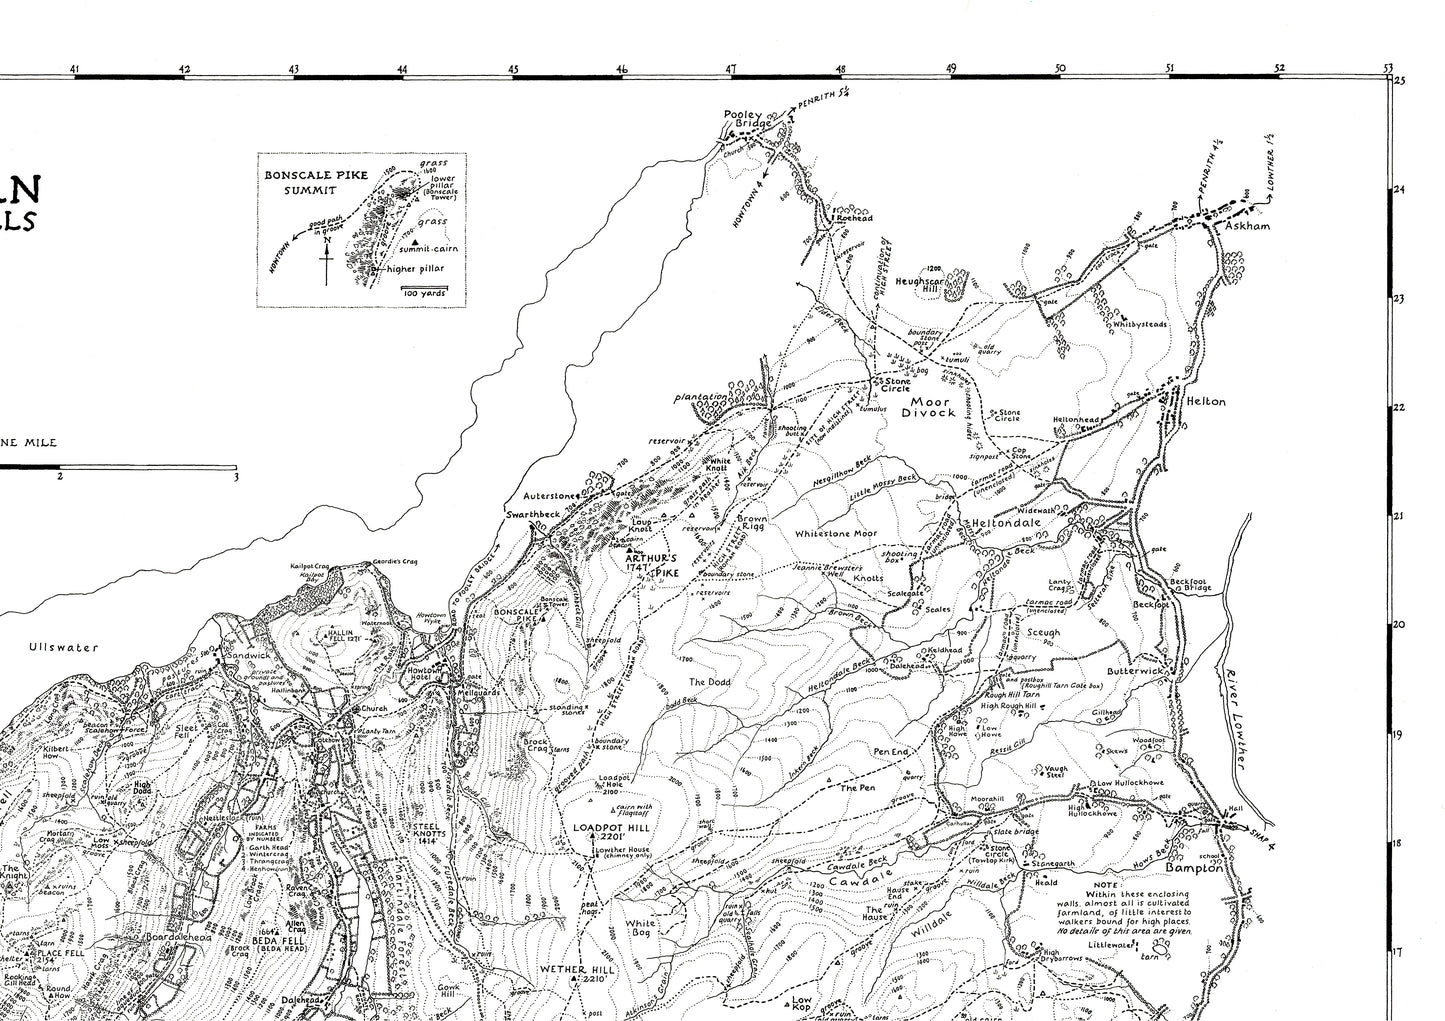 The Far Eastern Fells | Wainwright Map | The Lake District | Rare Print